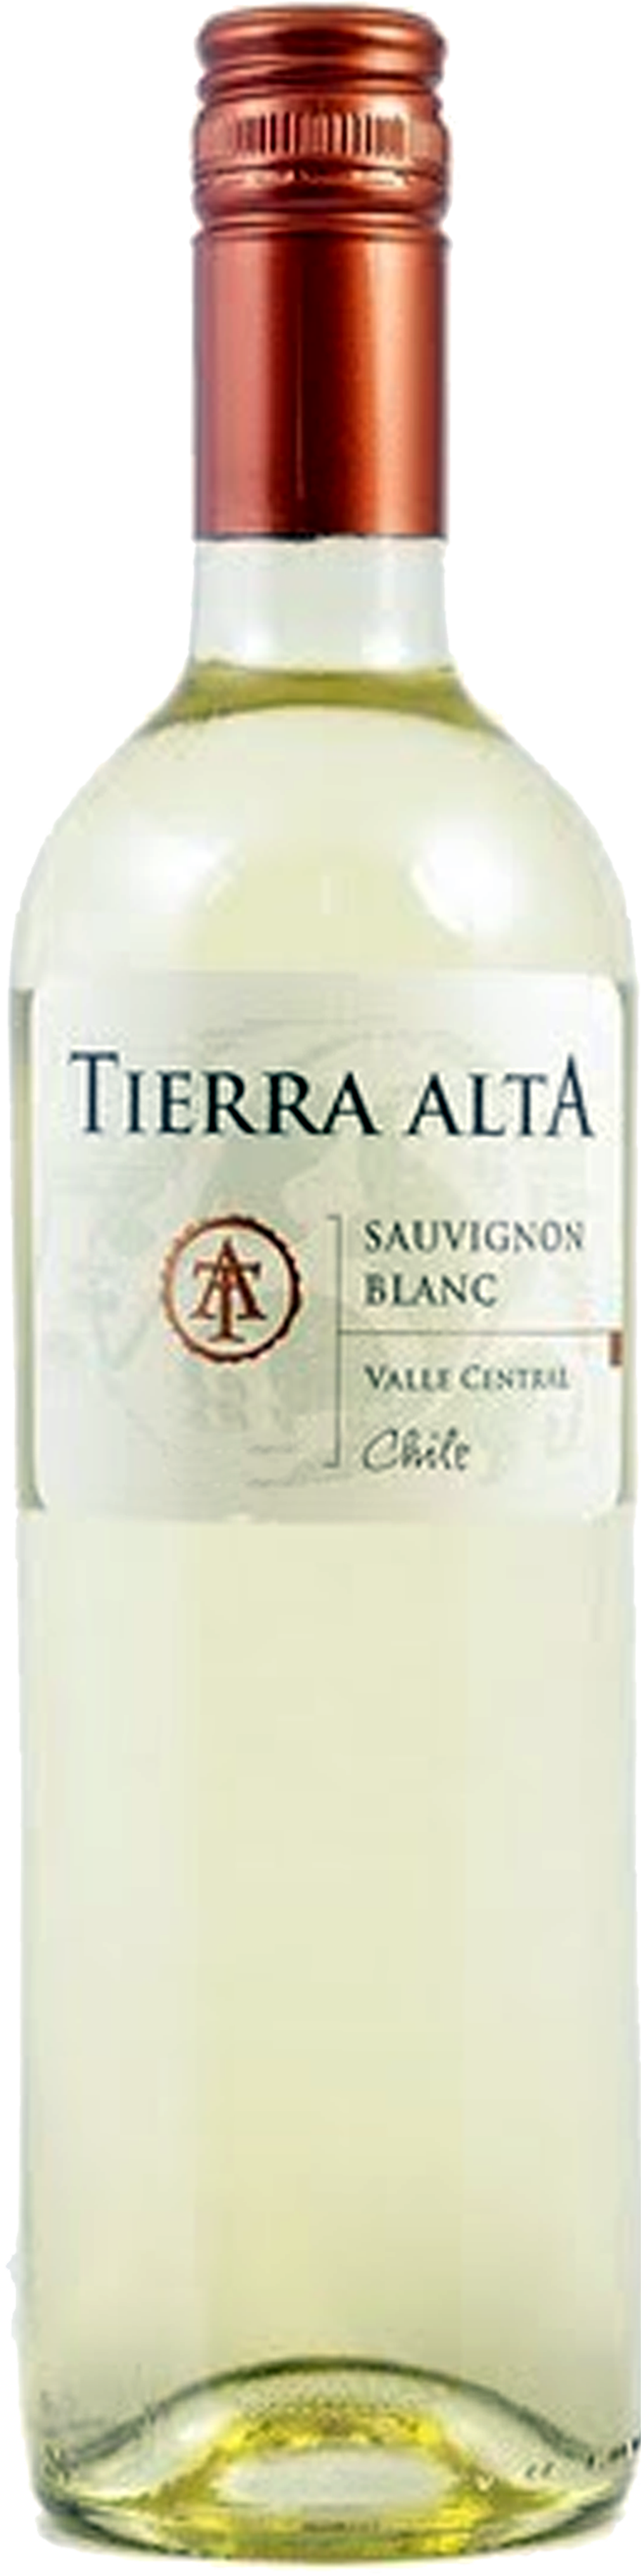 Bottle shot of 2012 Tierra Alta Sauvignon Blanc